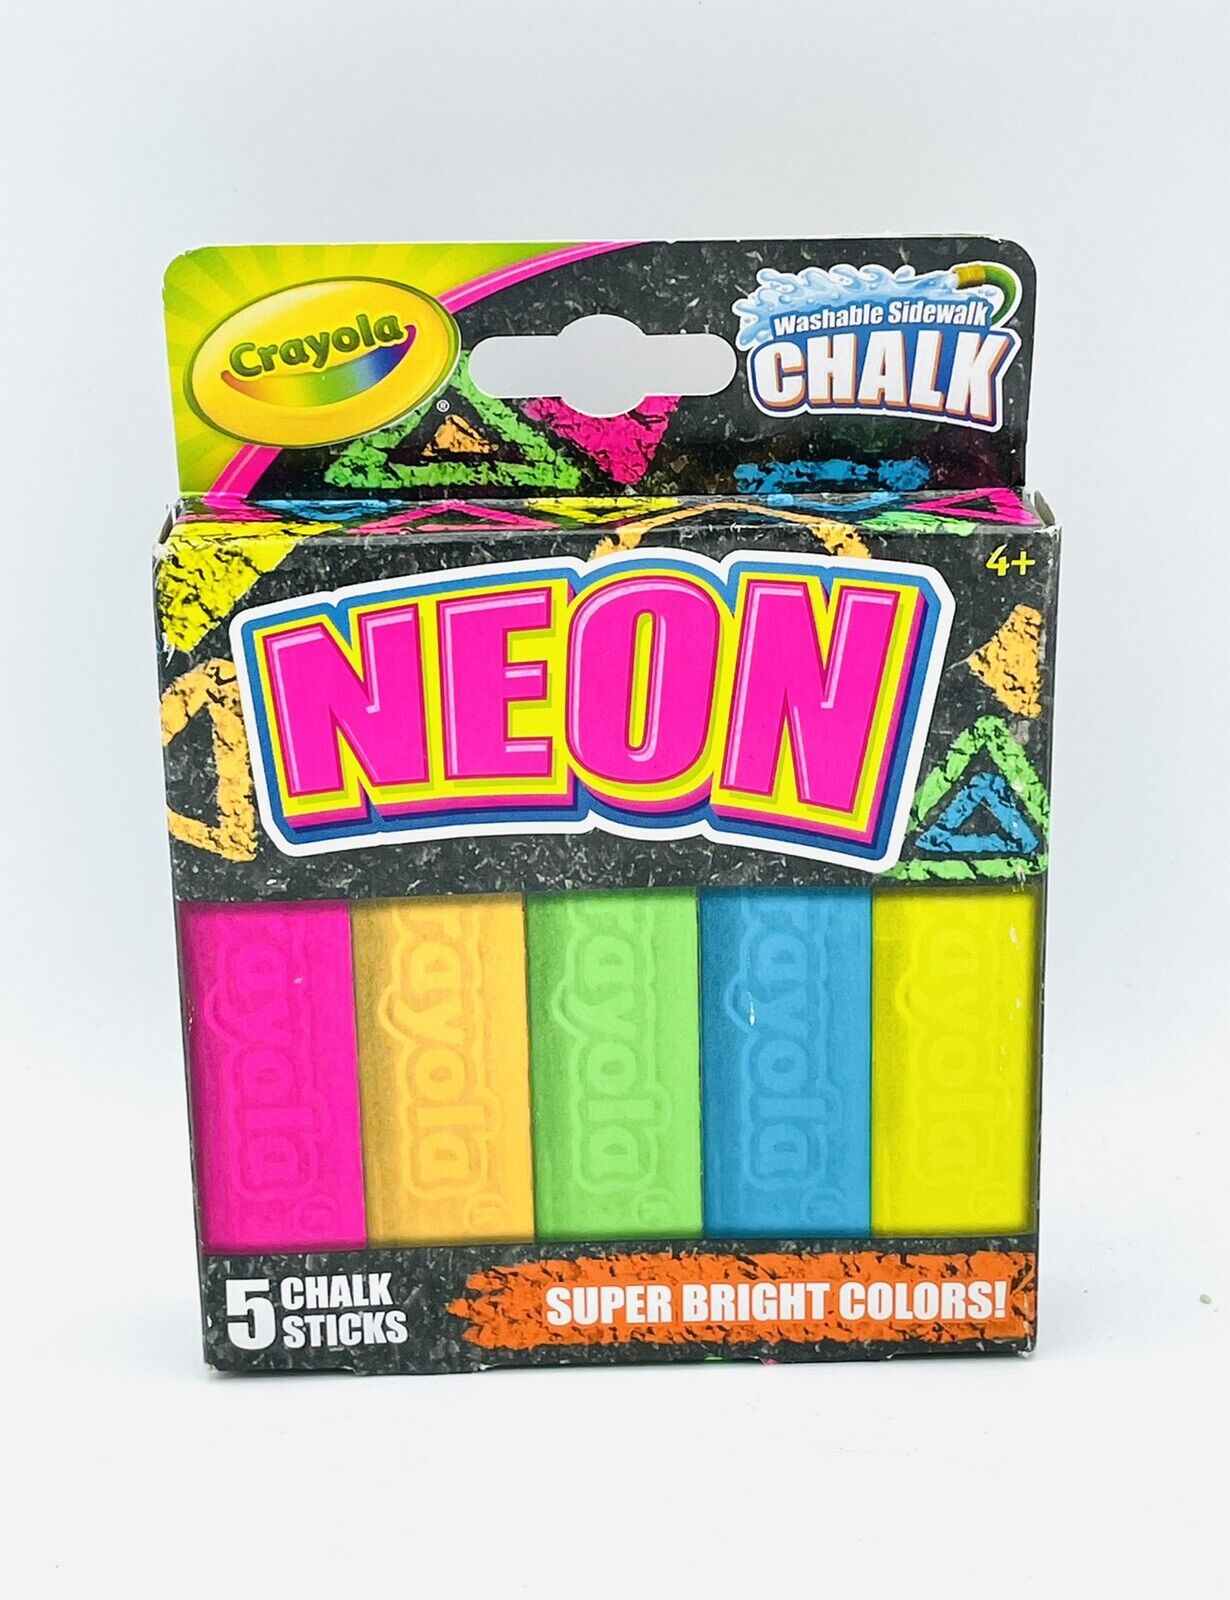 Crayola Washable Sidewalk Chalk, Neon Chalk, 5 count Stocking Stuffer SHIPS FREE